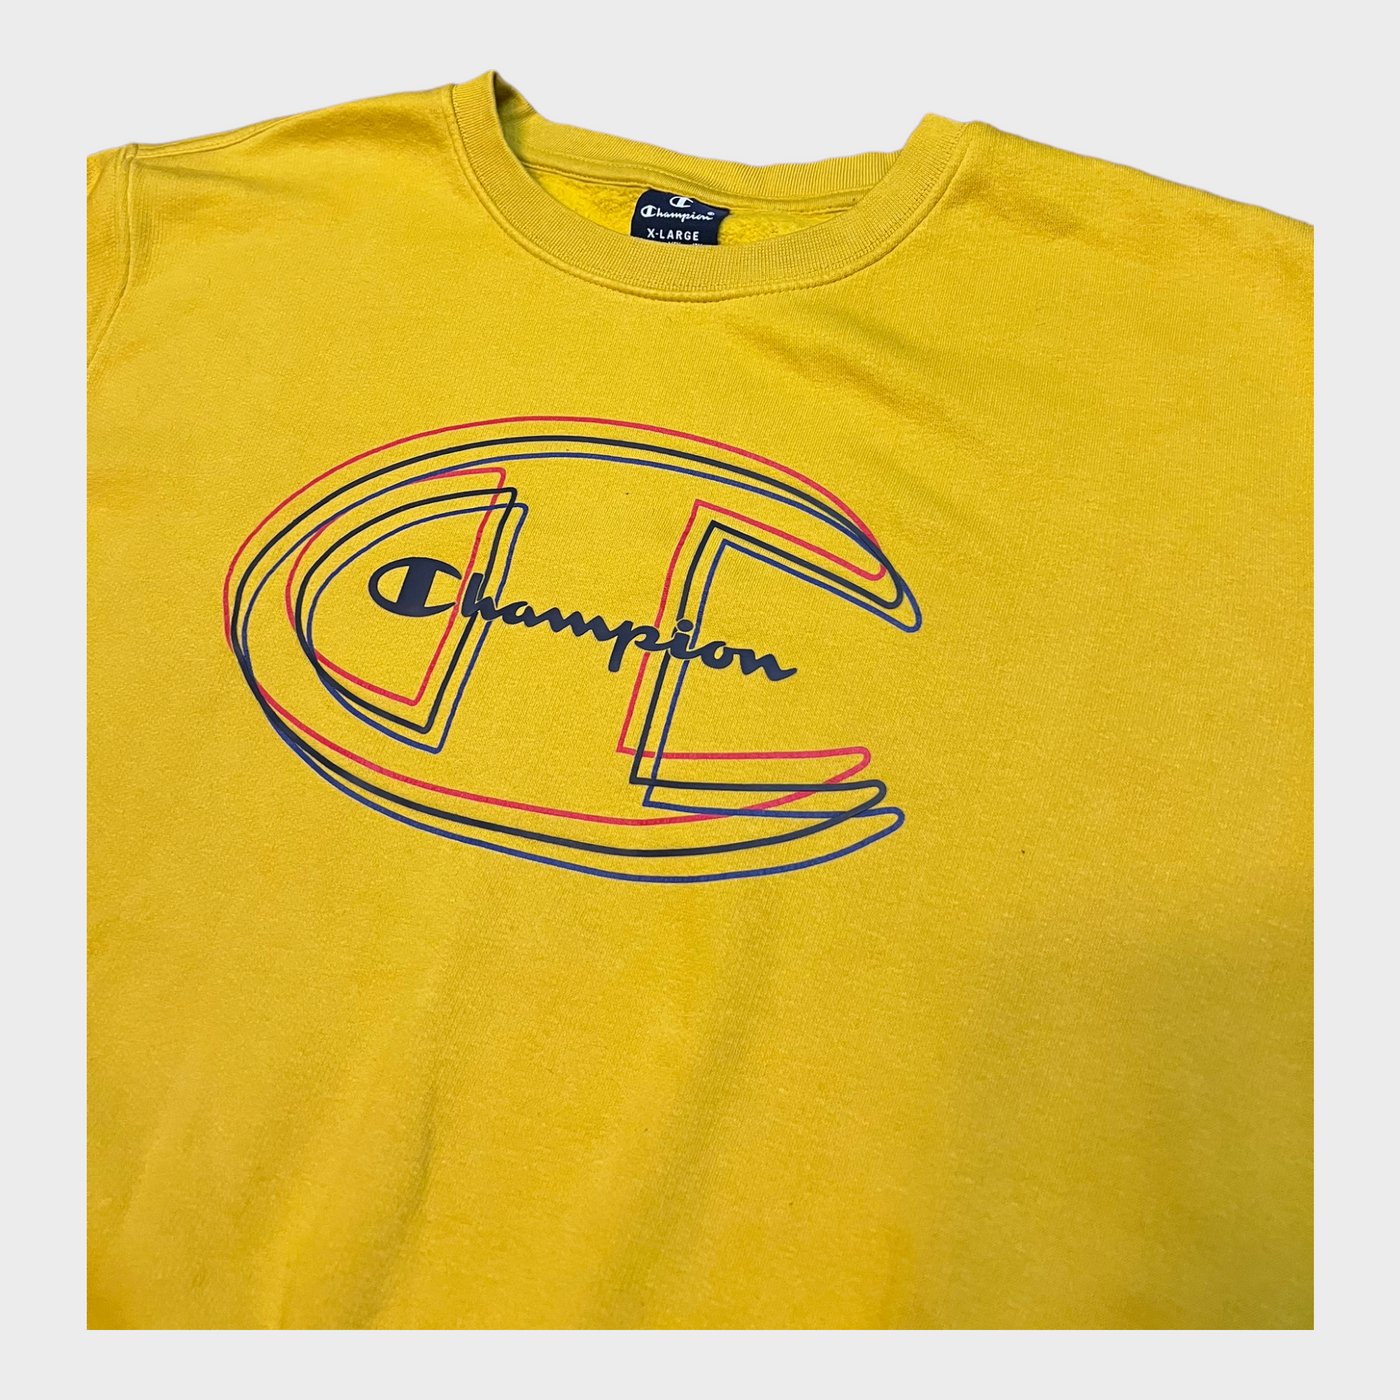 Cloe-up of the Champion varsity sweatshirt in bright yellow